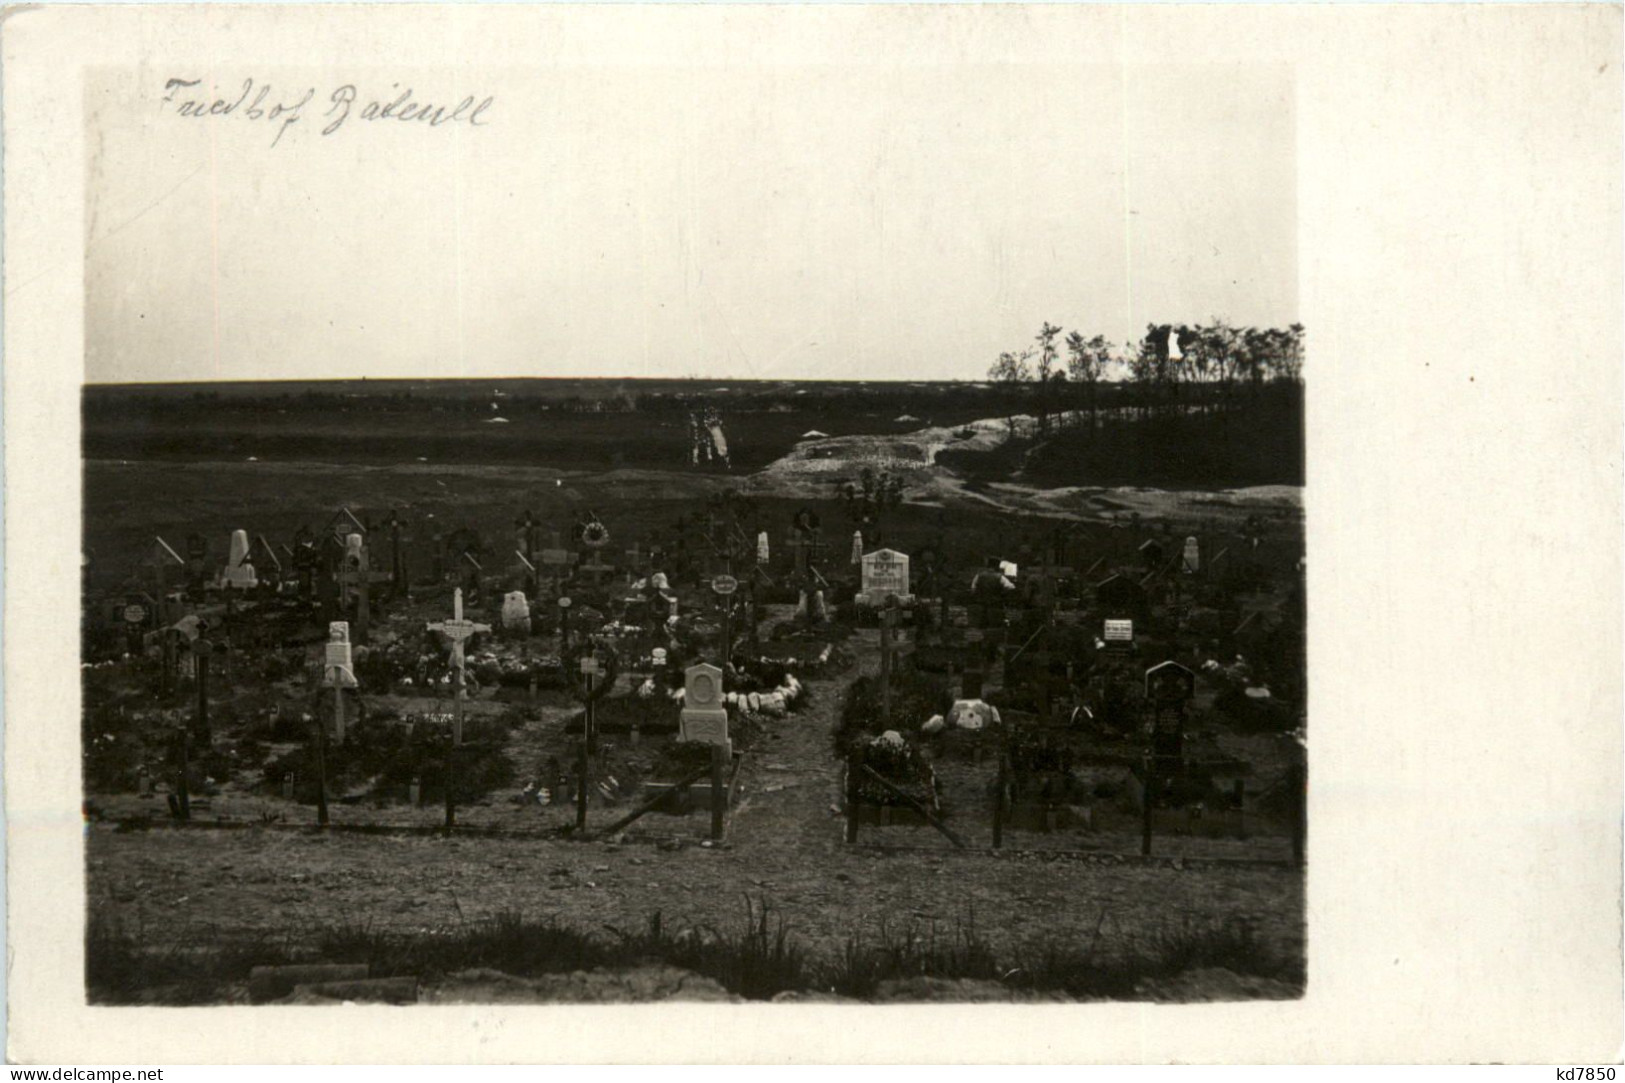 Friedhof Baieull 1. Weltkrieg - Soldatenfriedhöfen